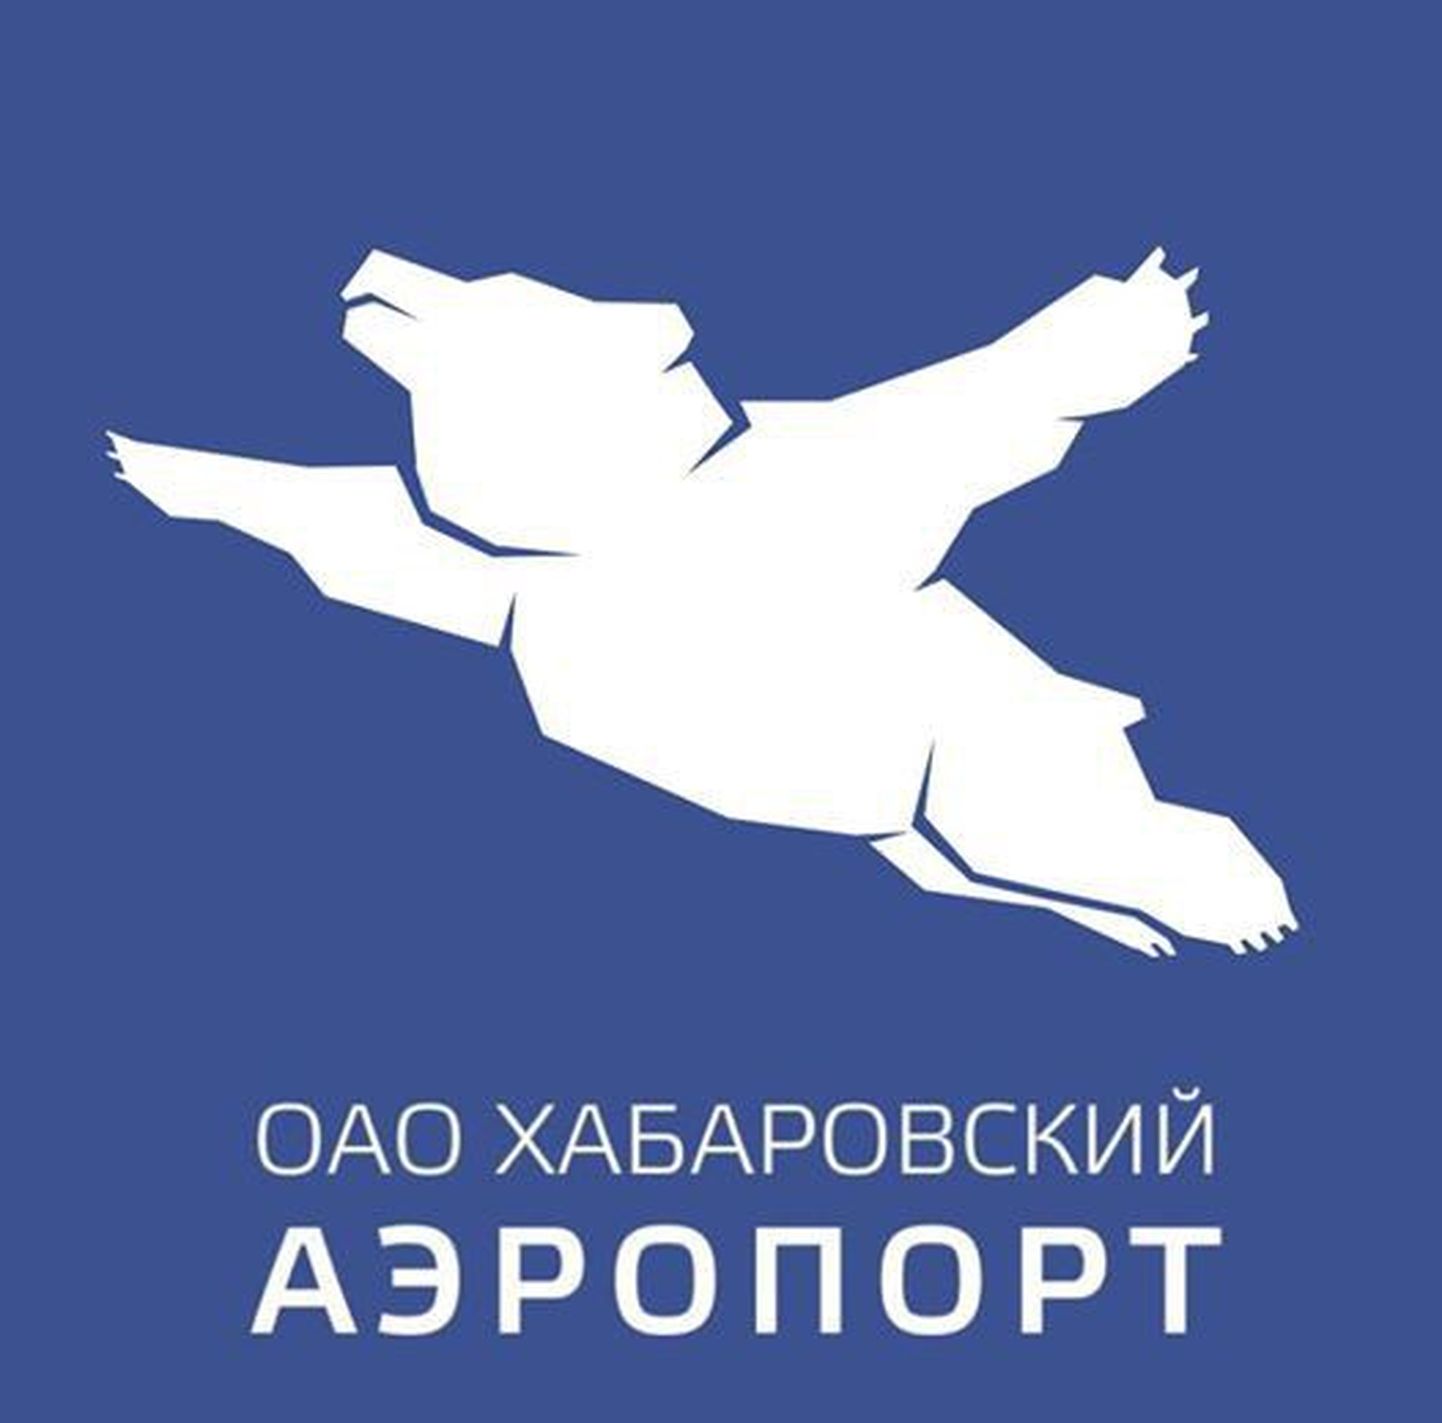 Vene lennujaama uus logo.